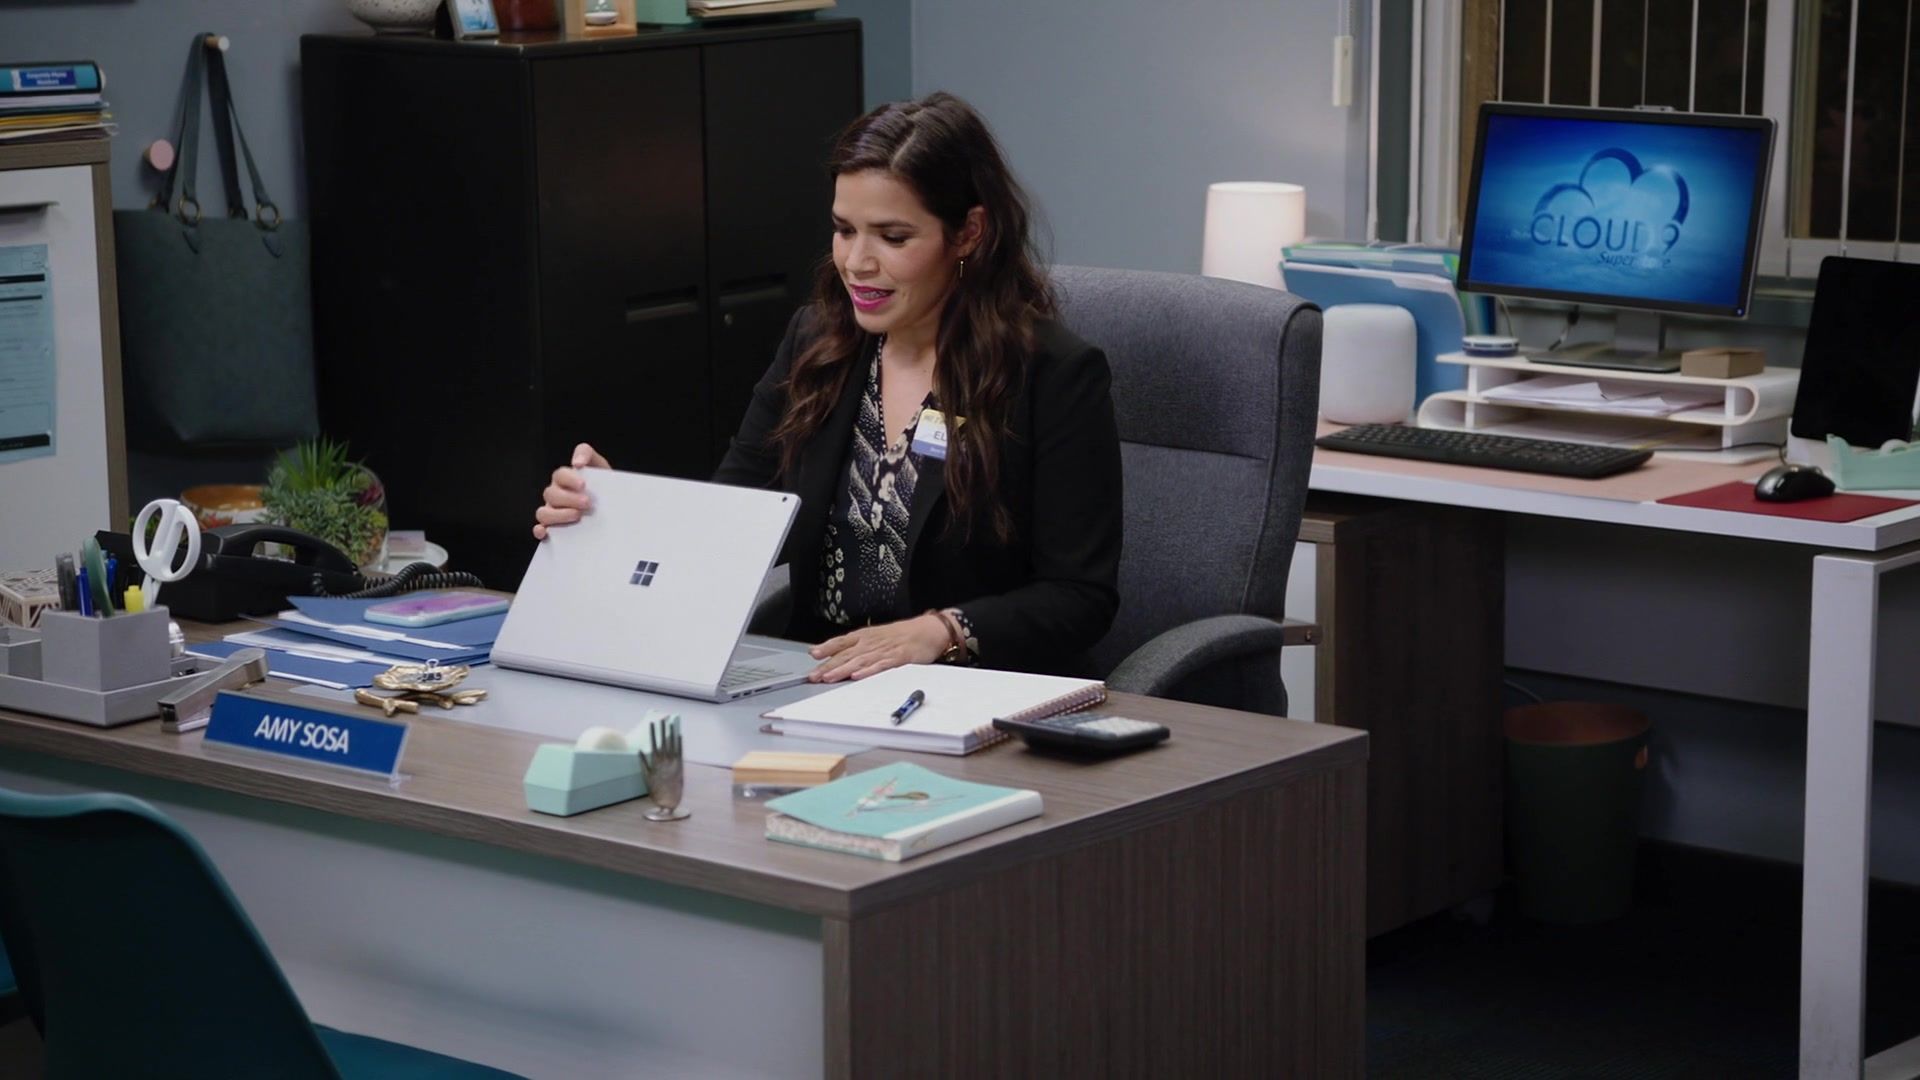 Microsoft Surface Notebook Of America Ferrera As Amelia 'Amy' Sosa In Superstore S06E01 Essential (2020)